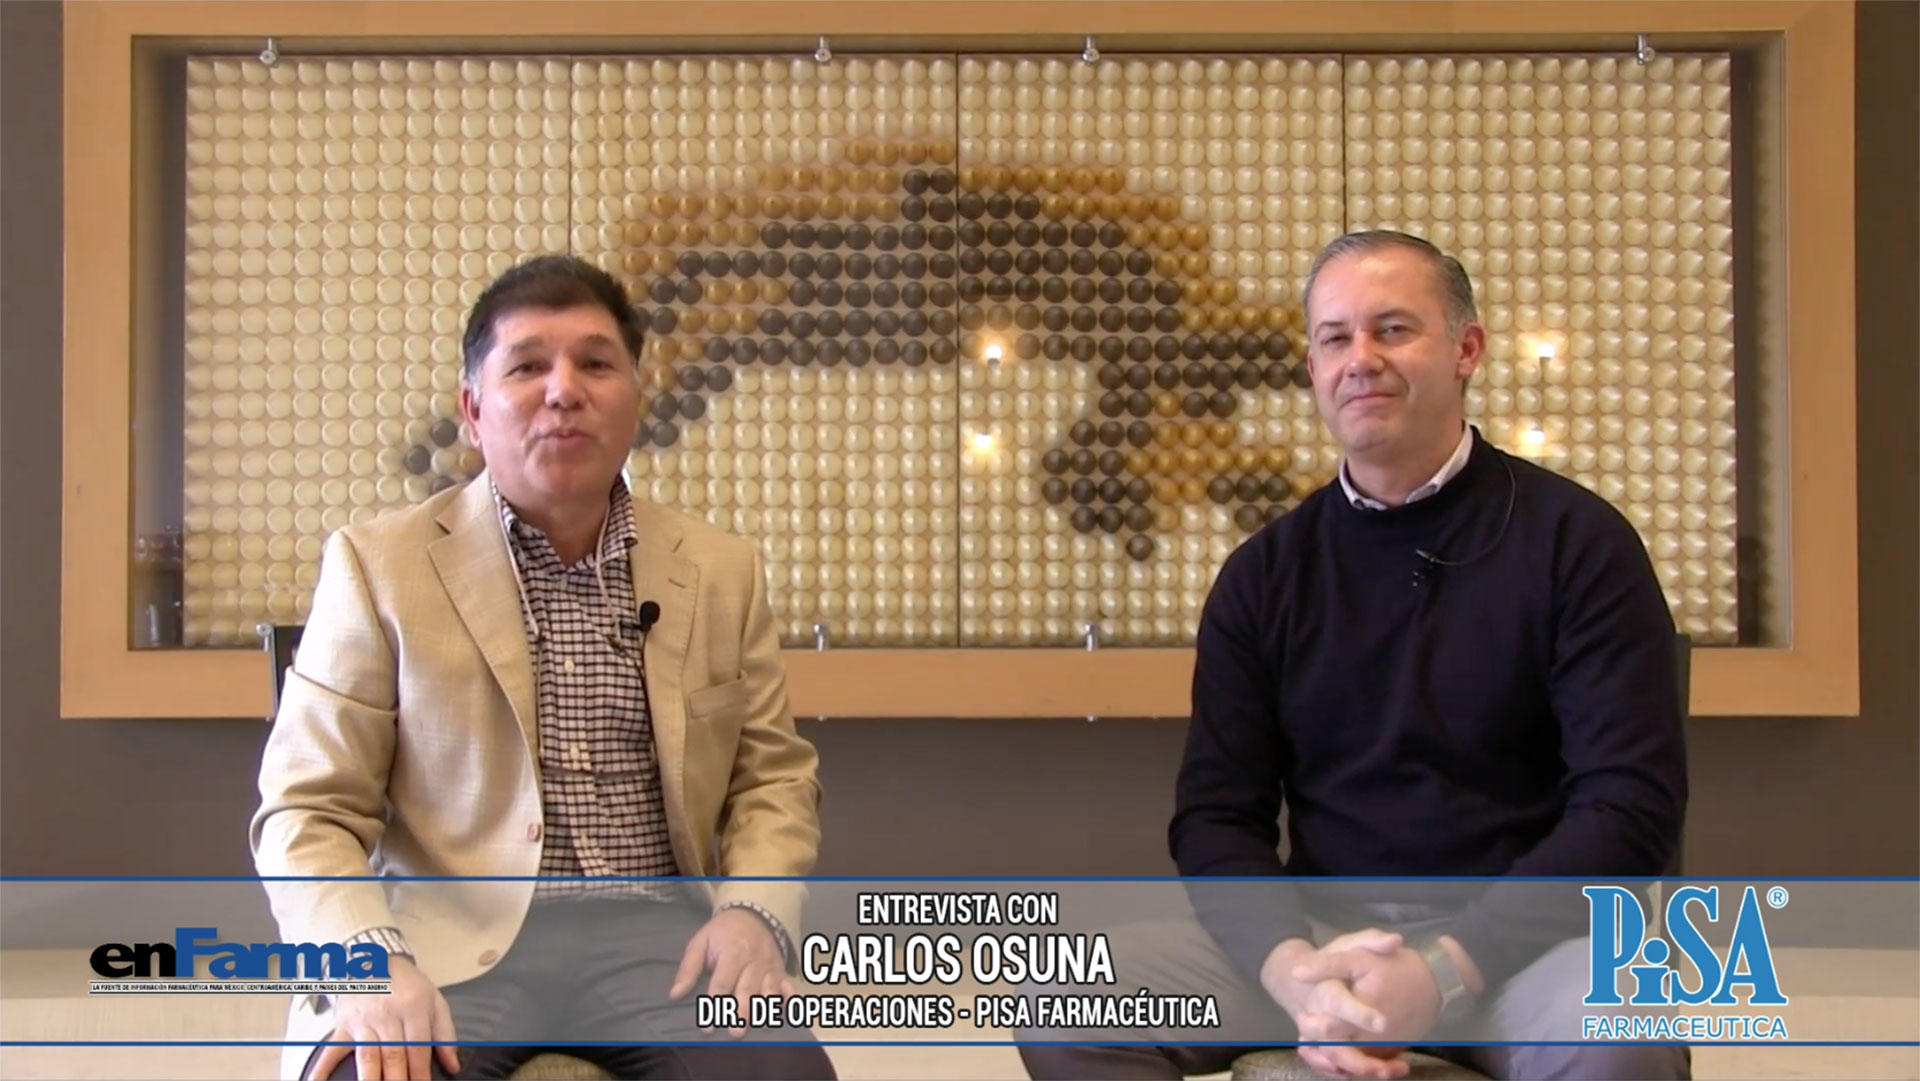 Entrevista a Carlos Osuna - Dir. de Operaciones Pisa Farmacéutica